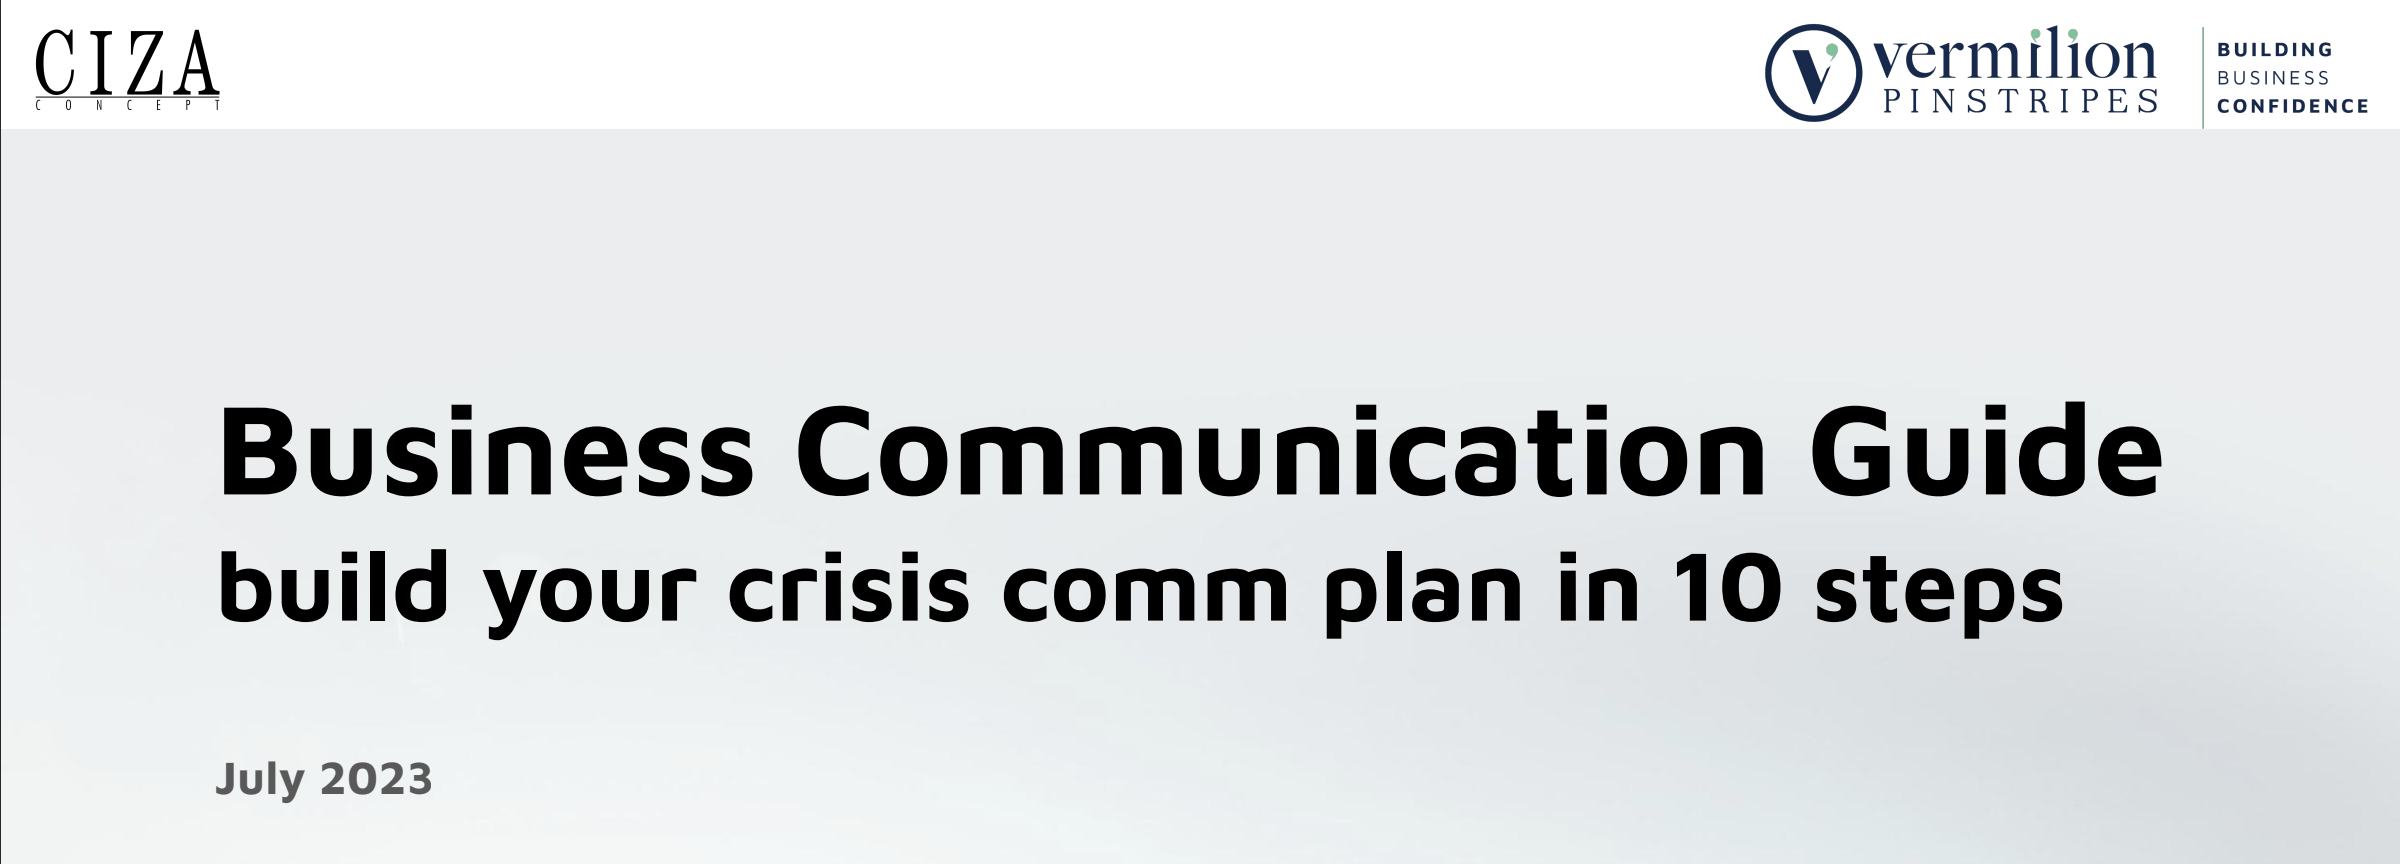 10 steps crisis communications plan by Vermilion Pinstripes